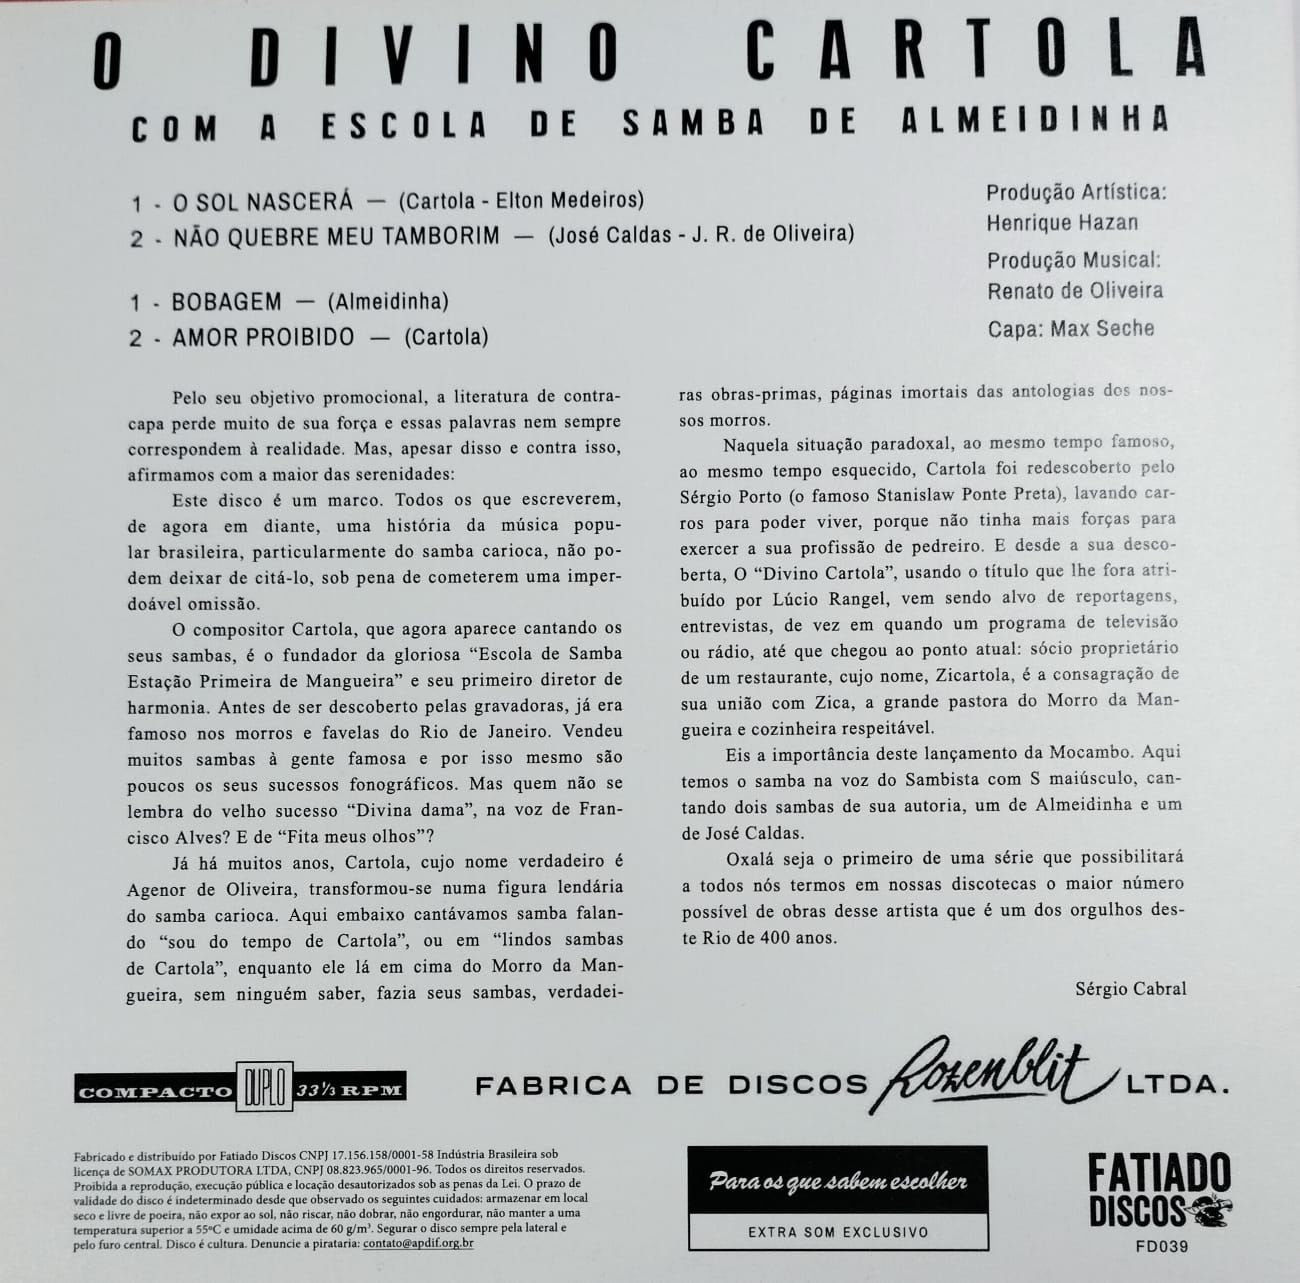 Cartola - O Divino Cartola com A Escola de Samba de Almeidinha (Compacto)